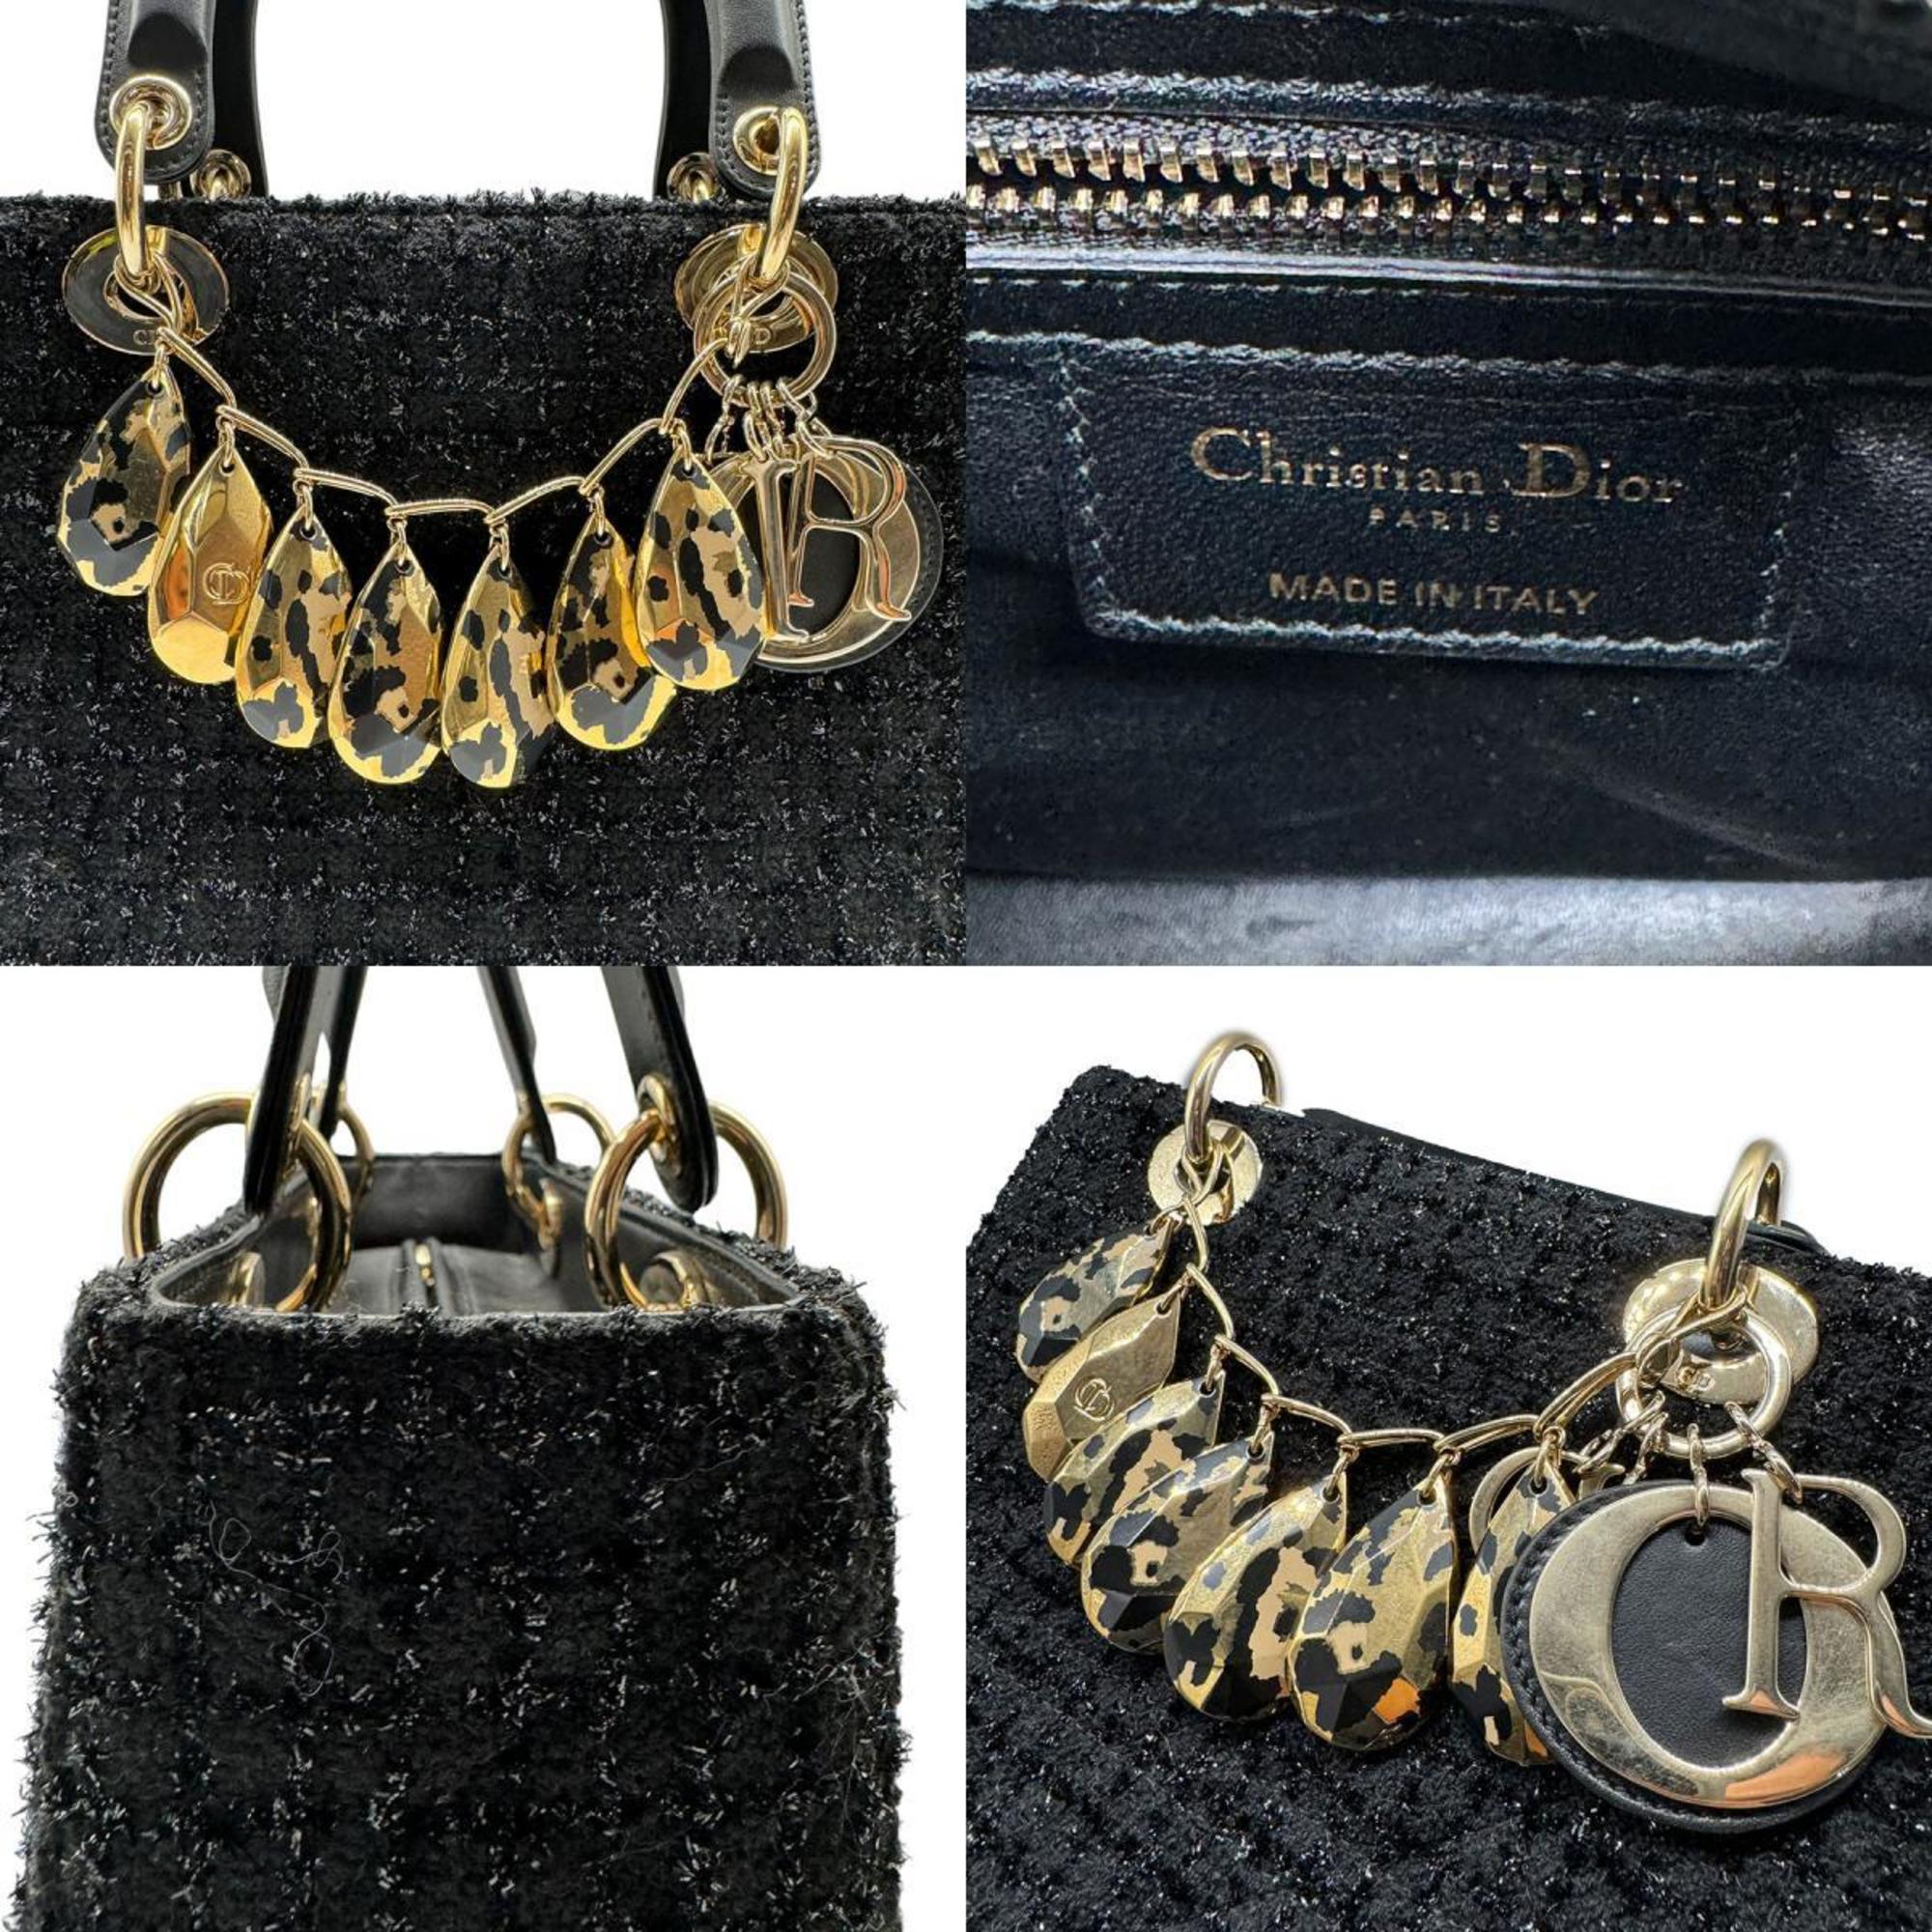 Christian Dior Lady Handbag Tweed/Leather Black x Gold Women's z0444